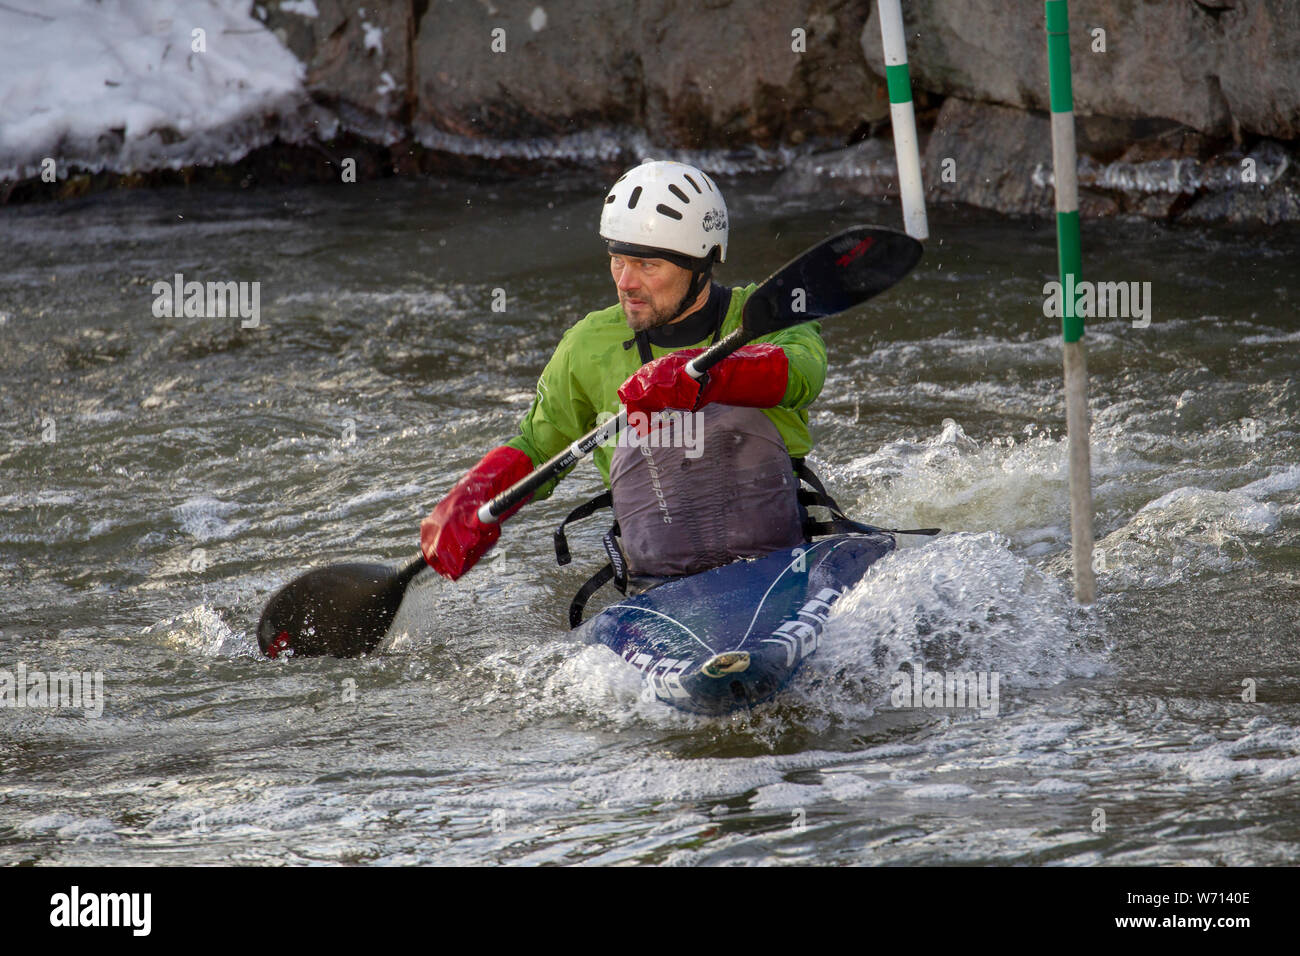 Canoe slalom a cold winter day in spring Stock Photo